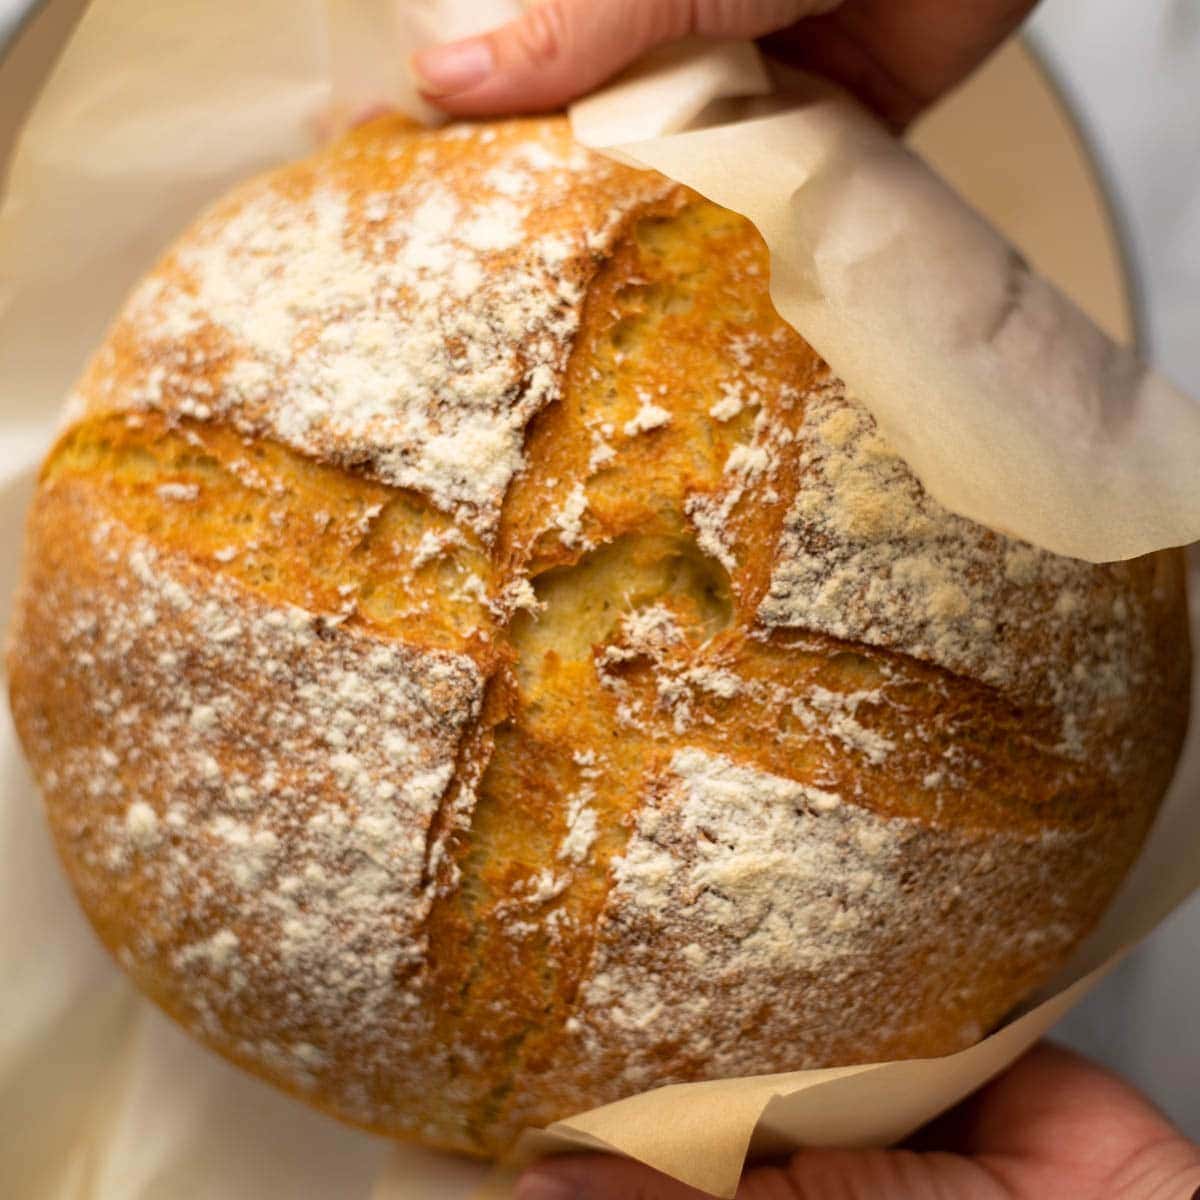 https://www.lexasrecipes.com/wp-content/uploads/2022/01/Dutch-Oven-Semolina-Bread-Featured-Image-1200px.jpg